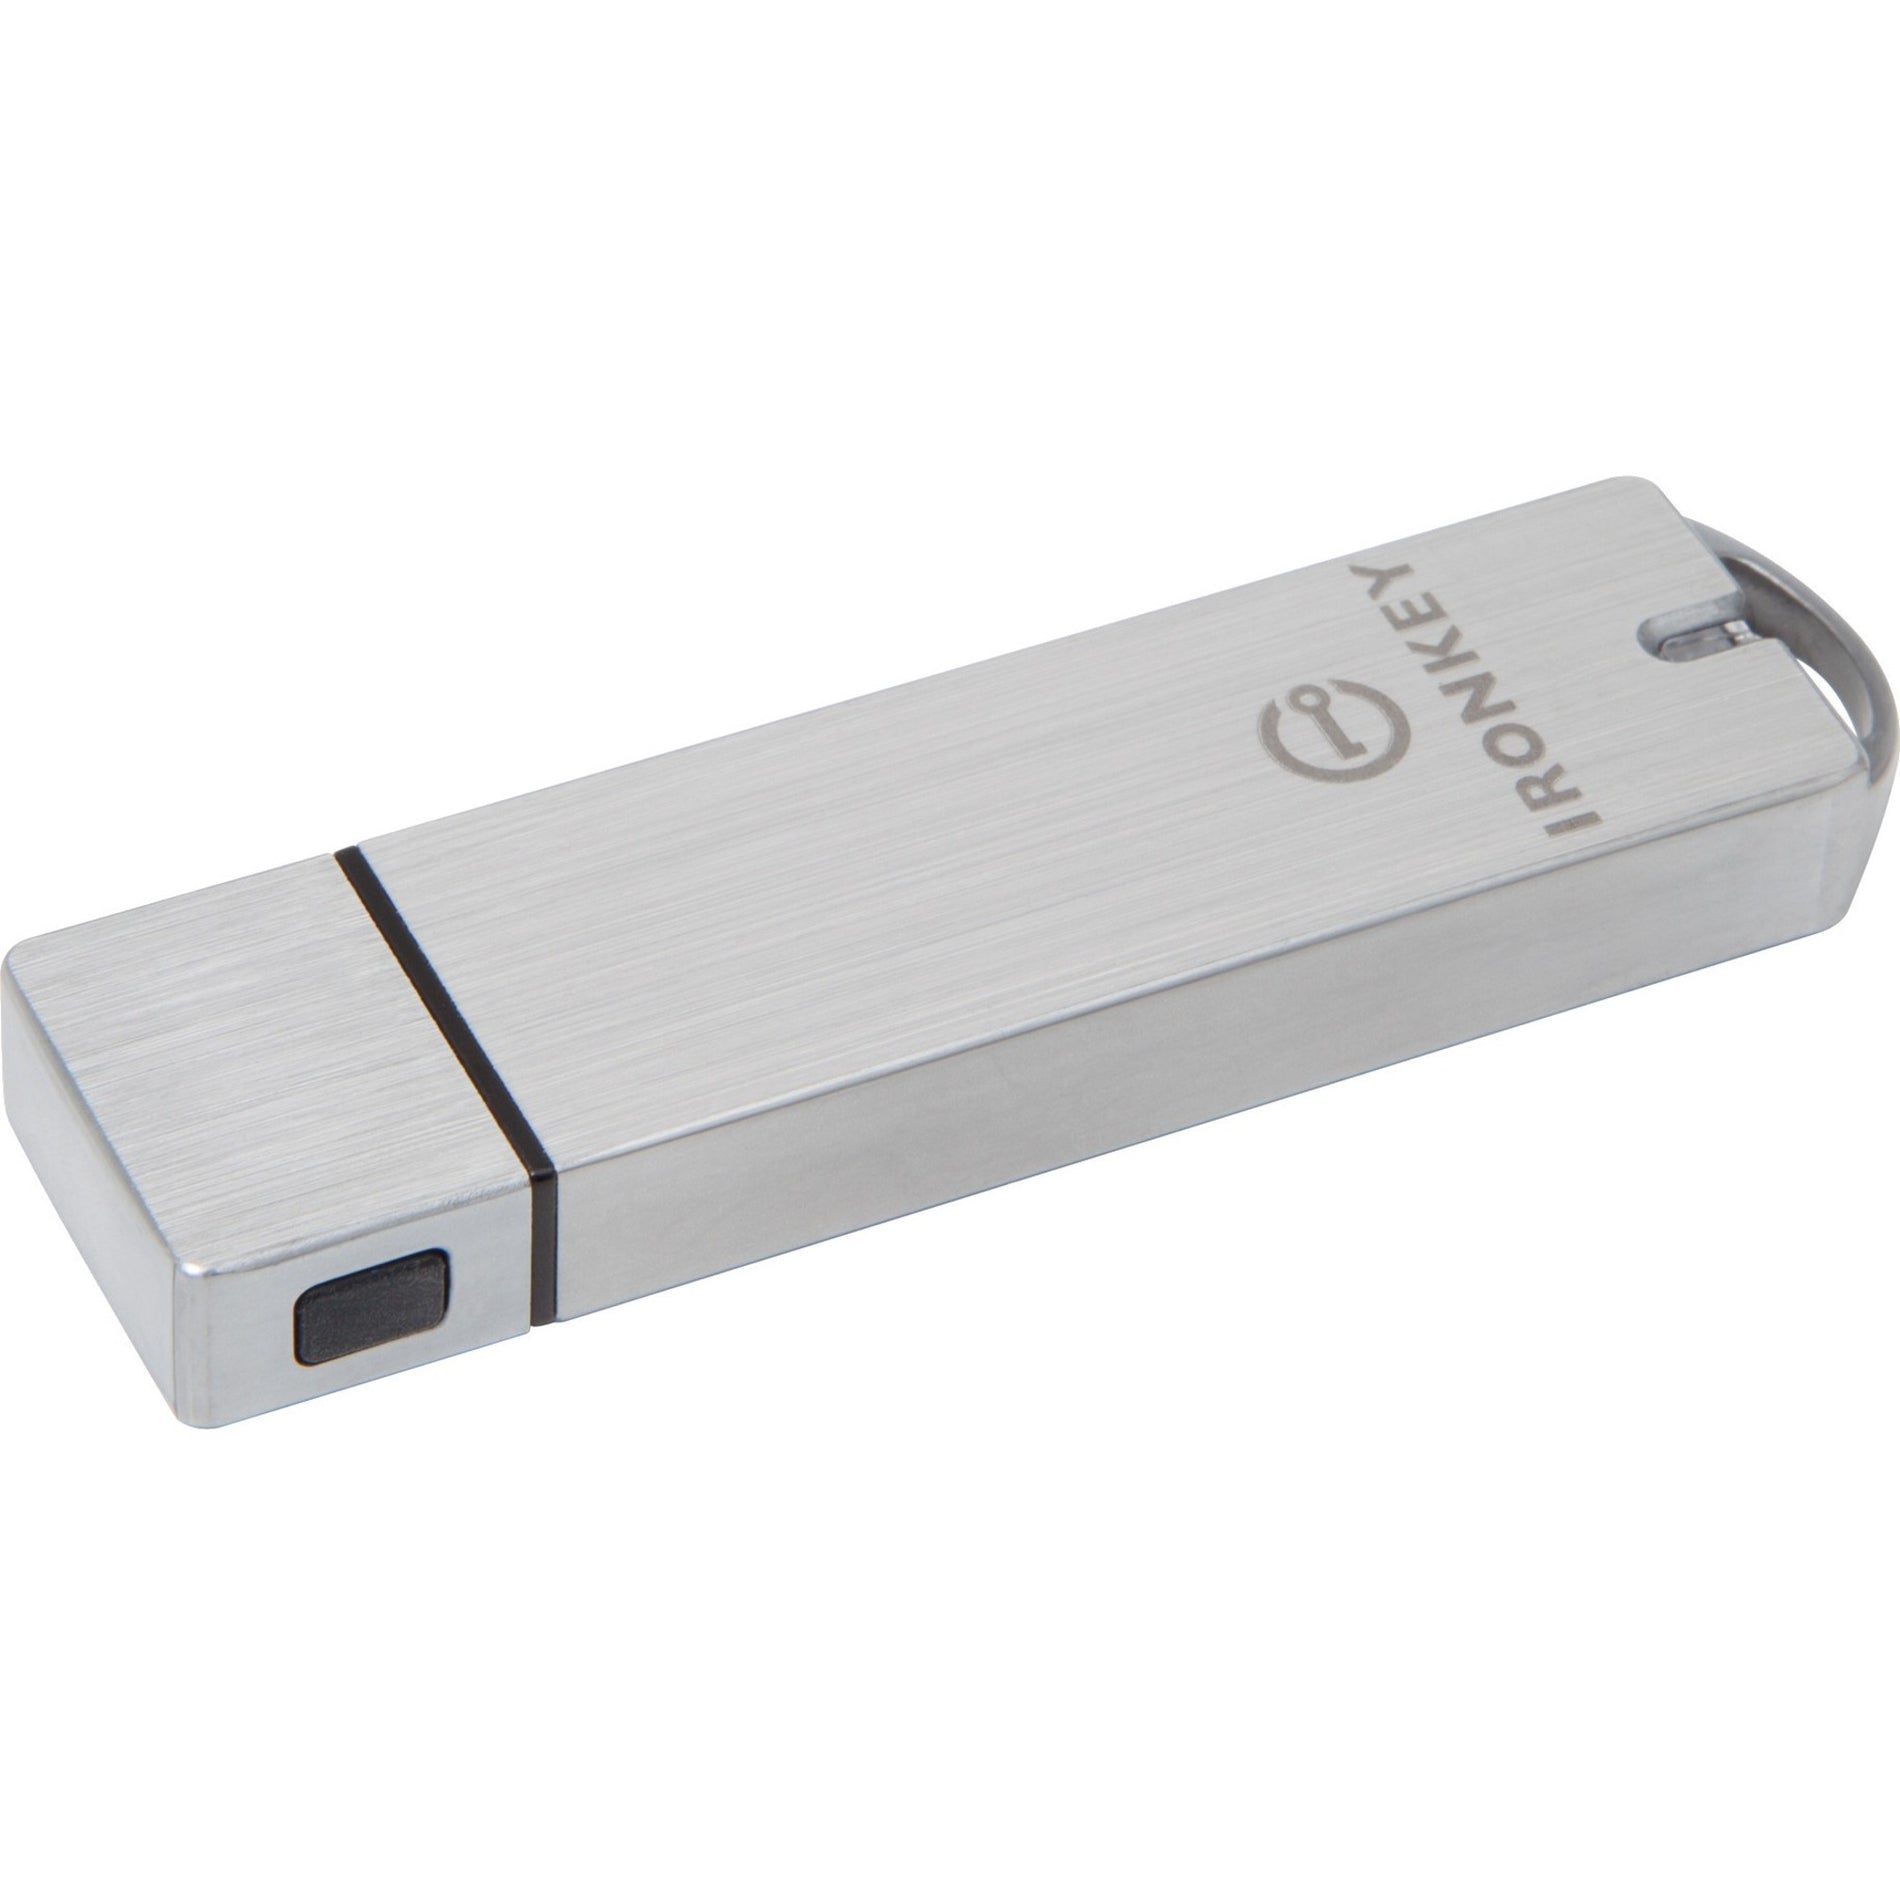 IronKey IKS1000B/64GB Basic S1000 Encrypted Flash Drive, 64GB USB 3.0, 256-bit AES Encryption